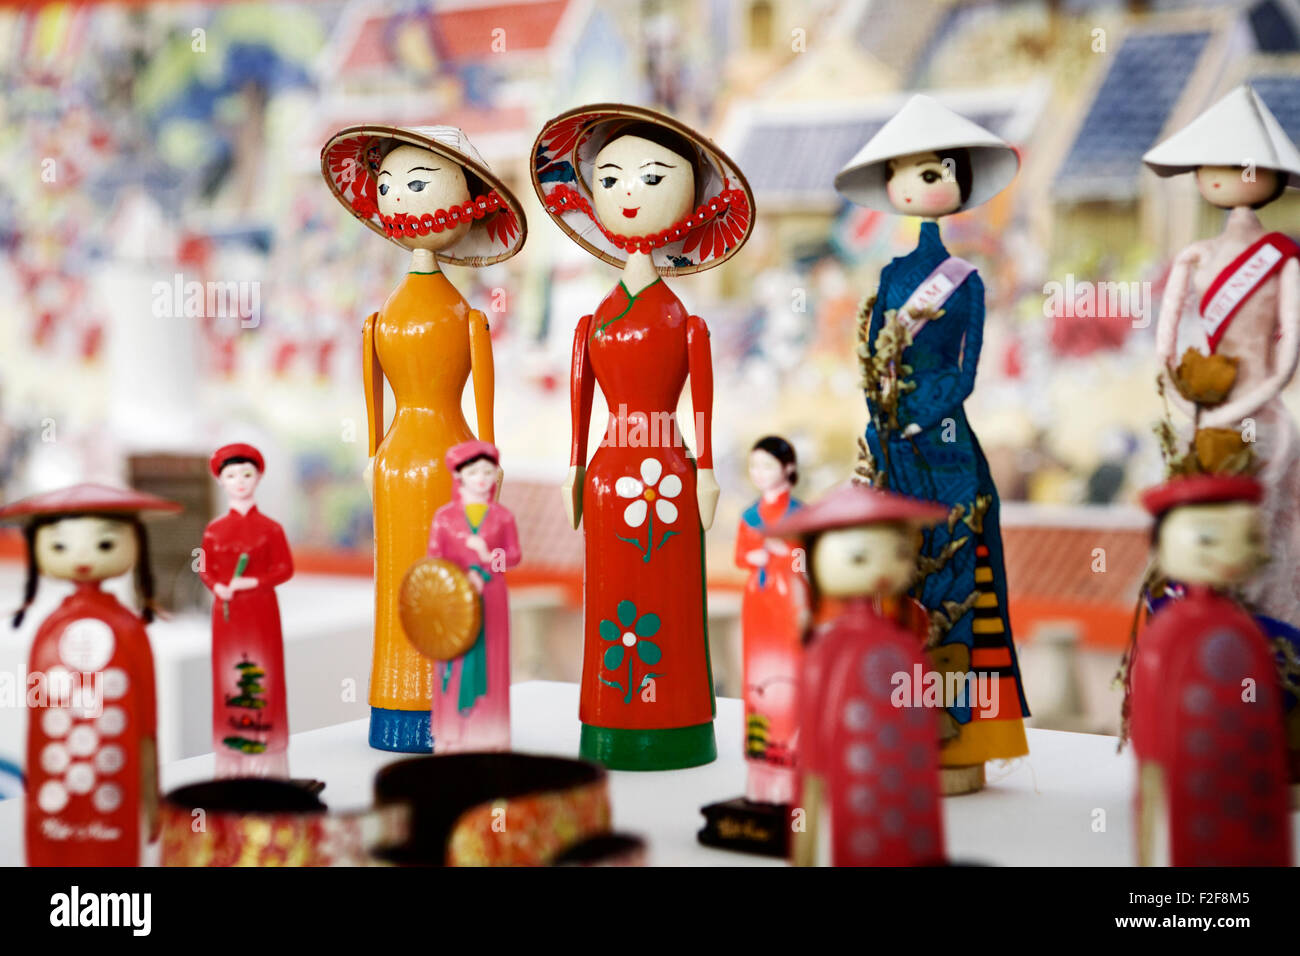 Vietnam: Vietnamese wooden dolls. Asia, Asian travel, Asian culture, Asia tourism. Stock Photo